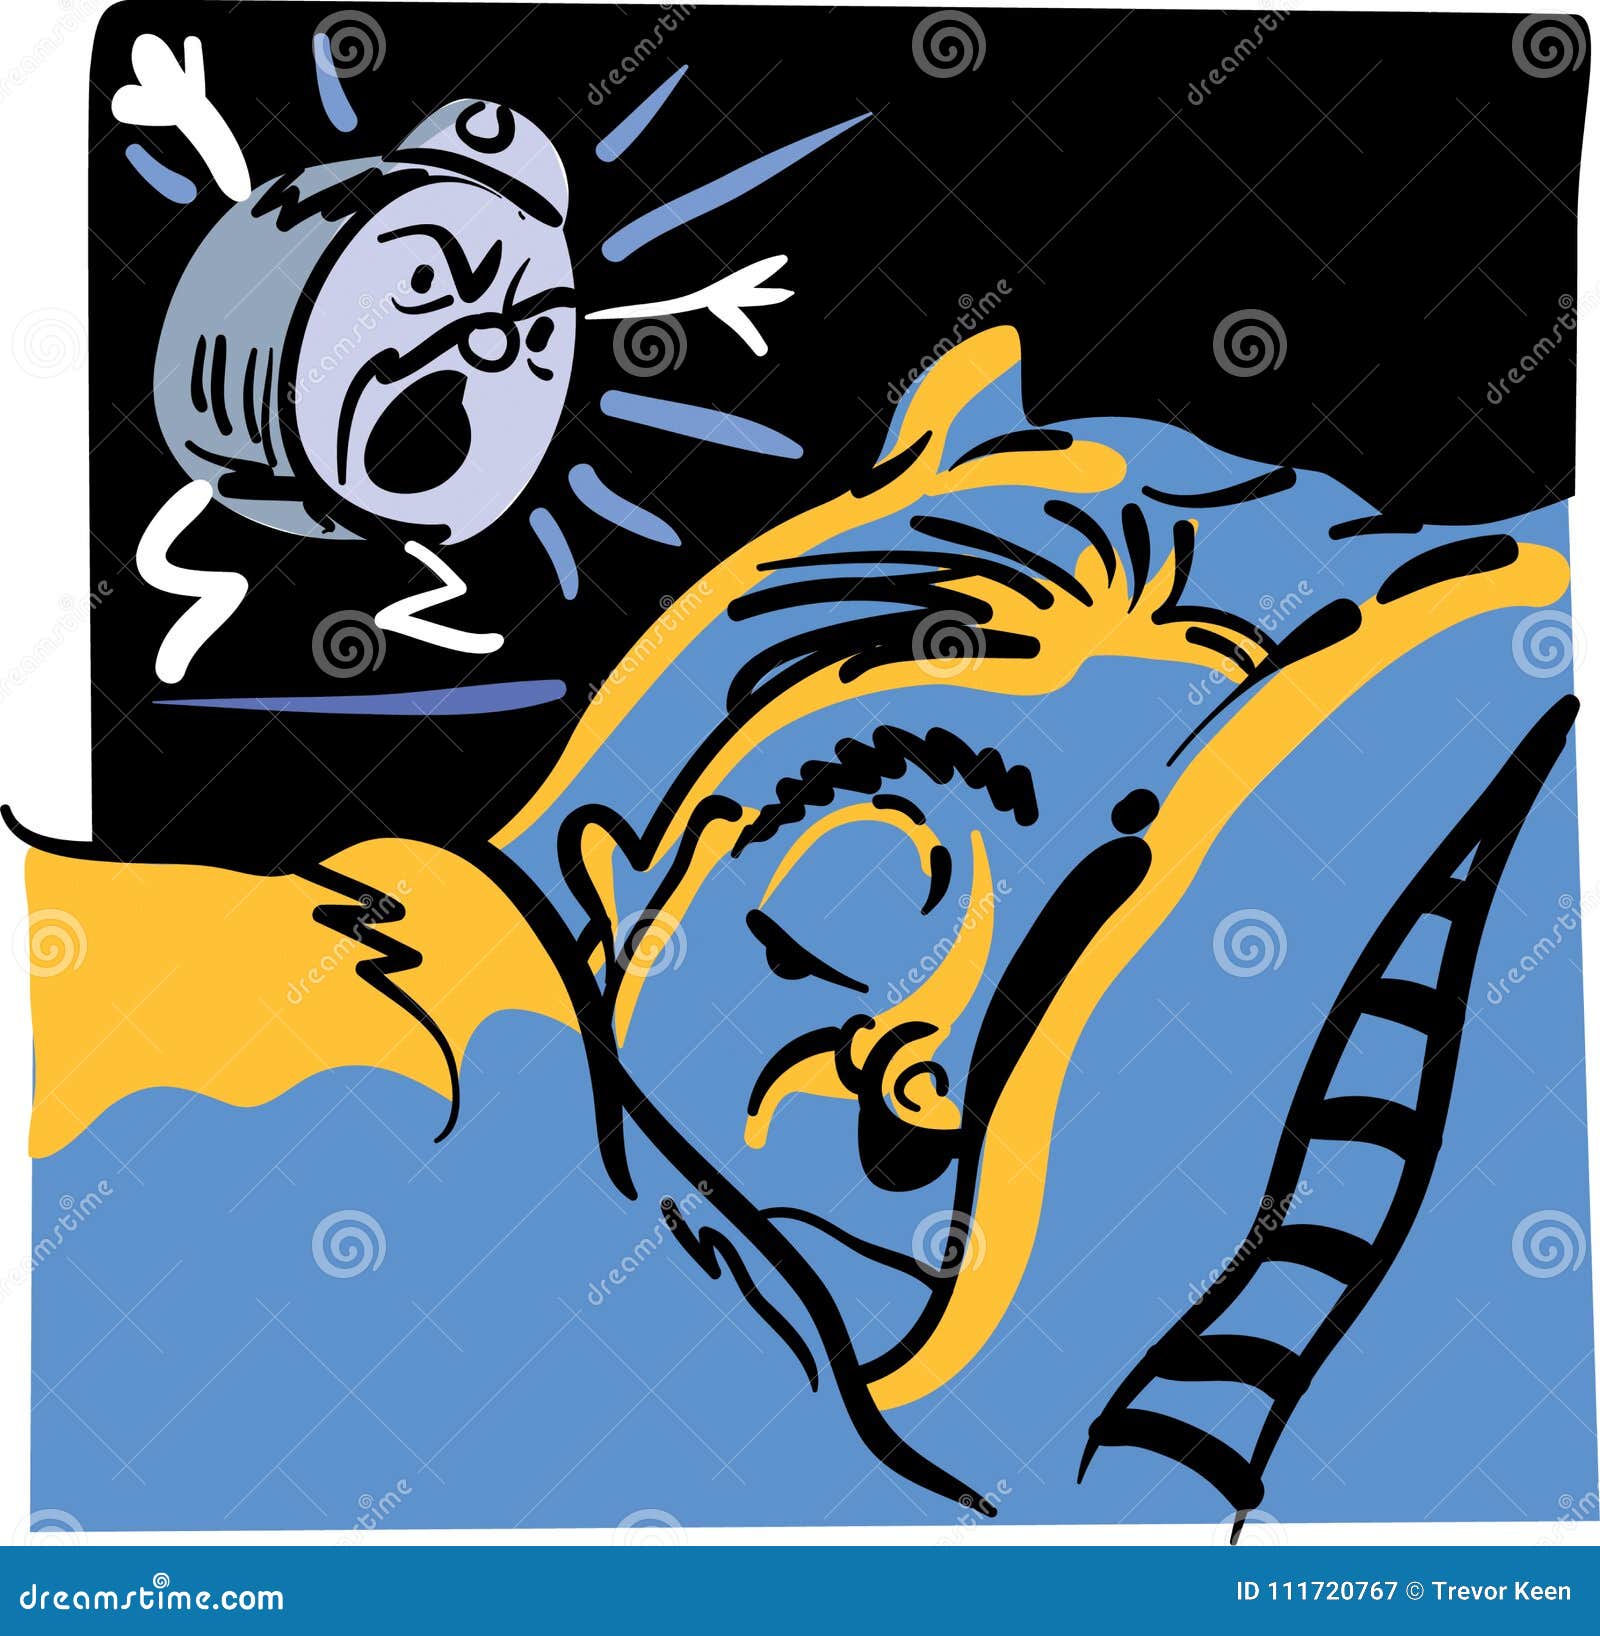 Angry Alarm Clock Cartoon Royalty Free Illustration 44051214